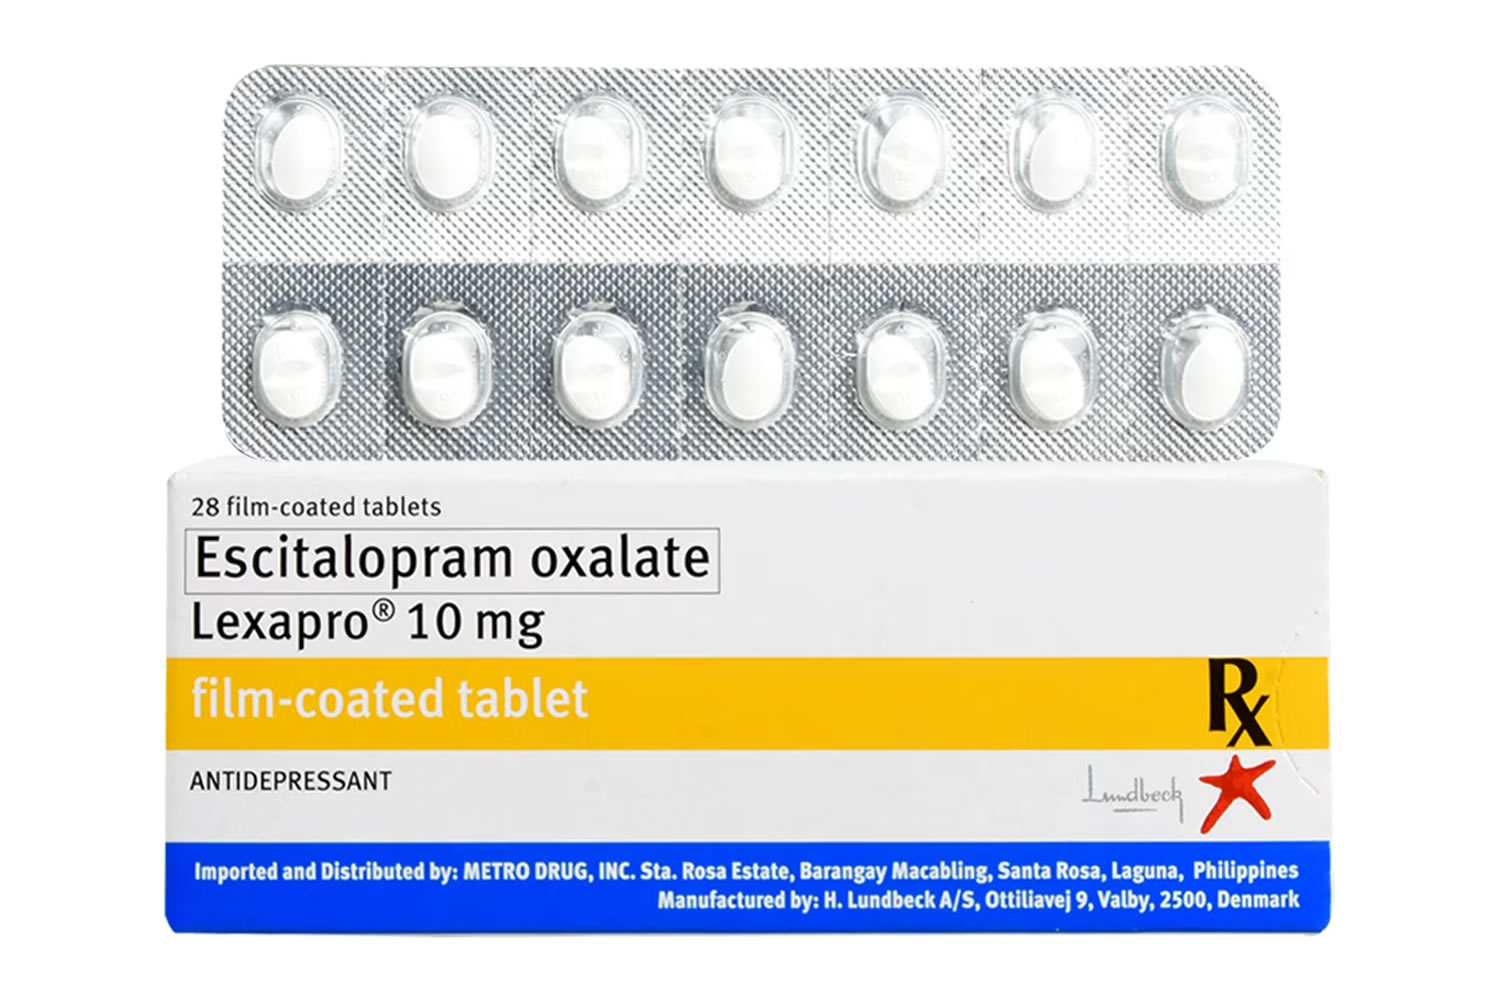 Lexapro Generic Escitalopram Side Effects Precautions More